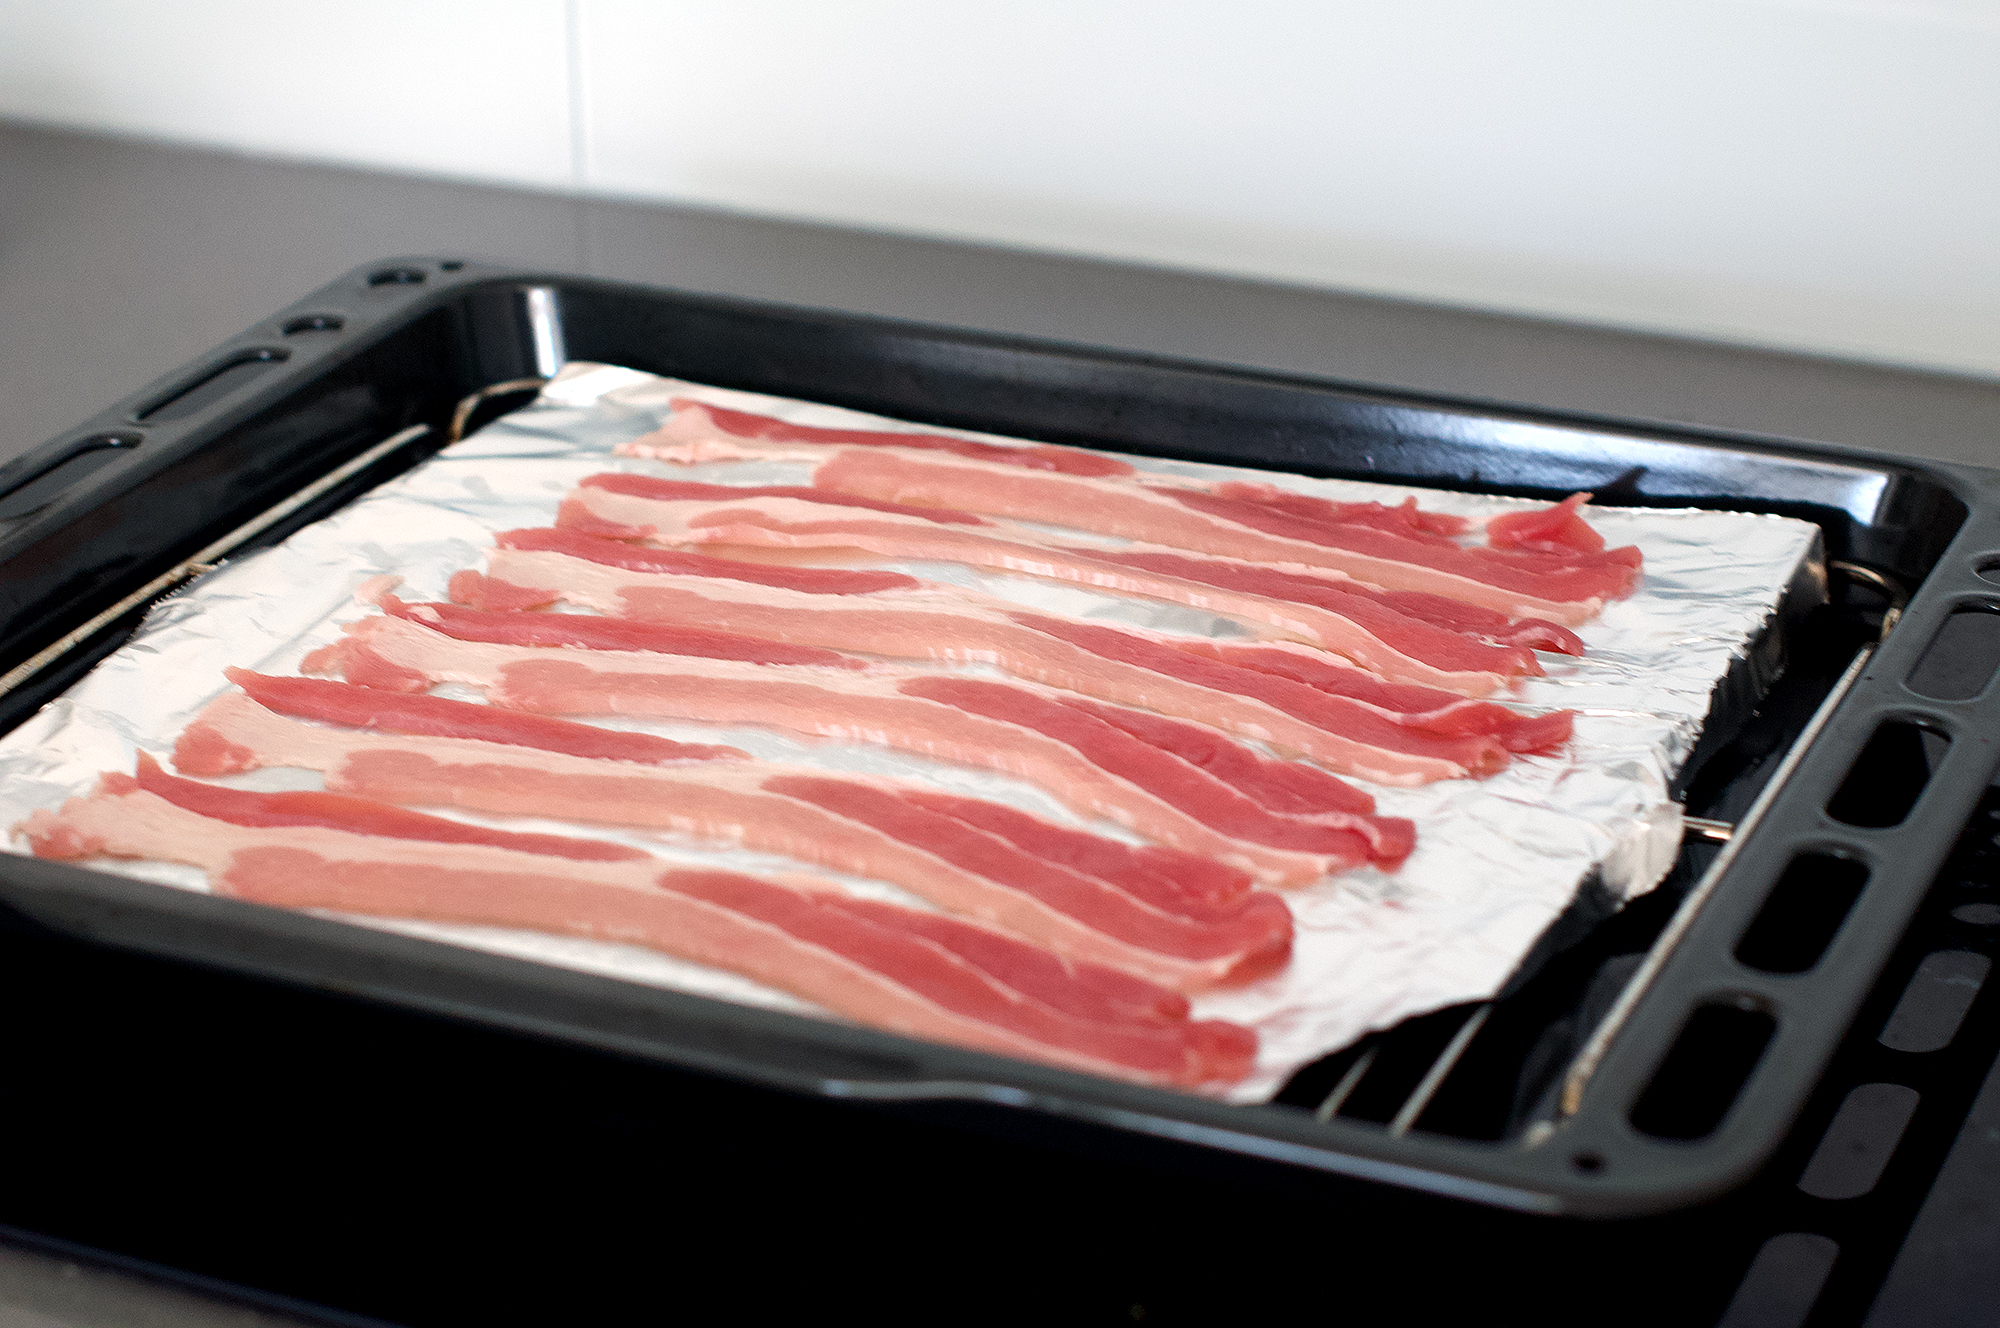 Oven grill crispy unsmoked bacon rashers